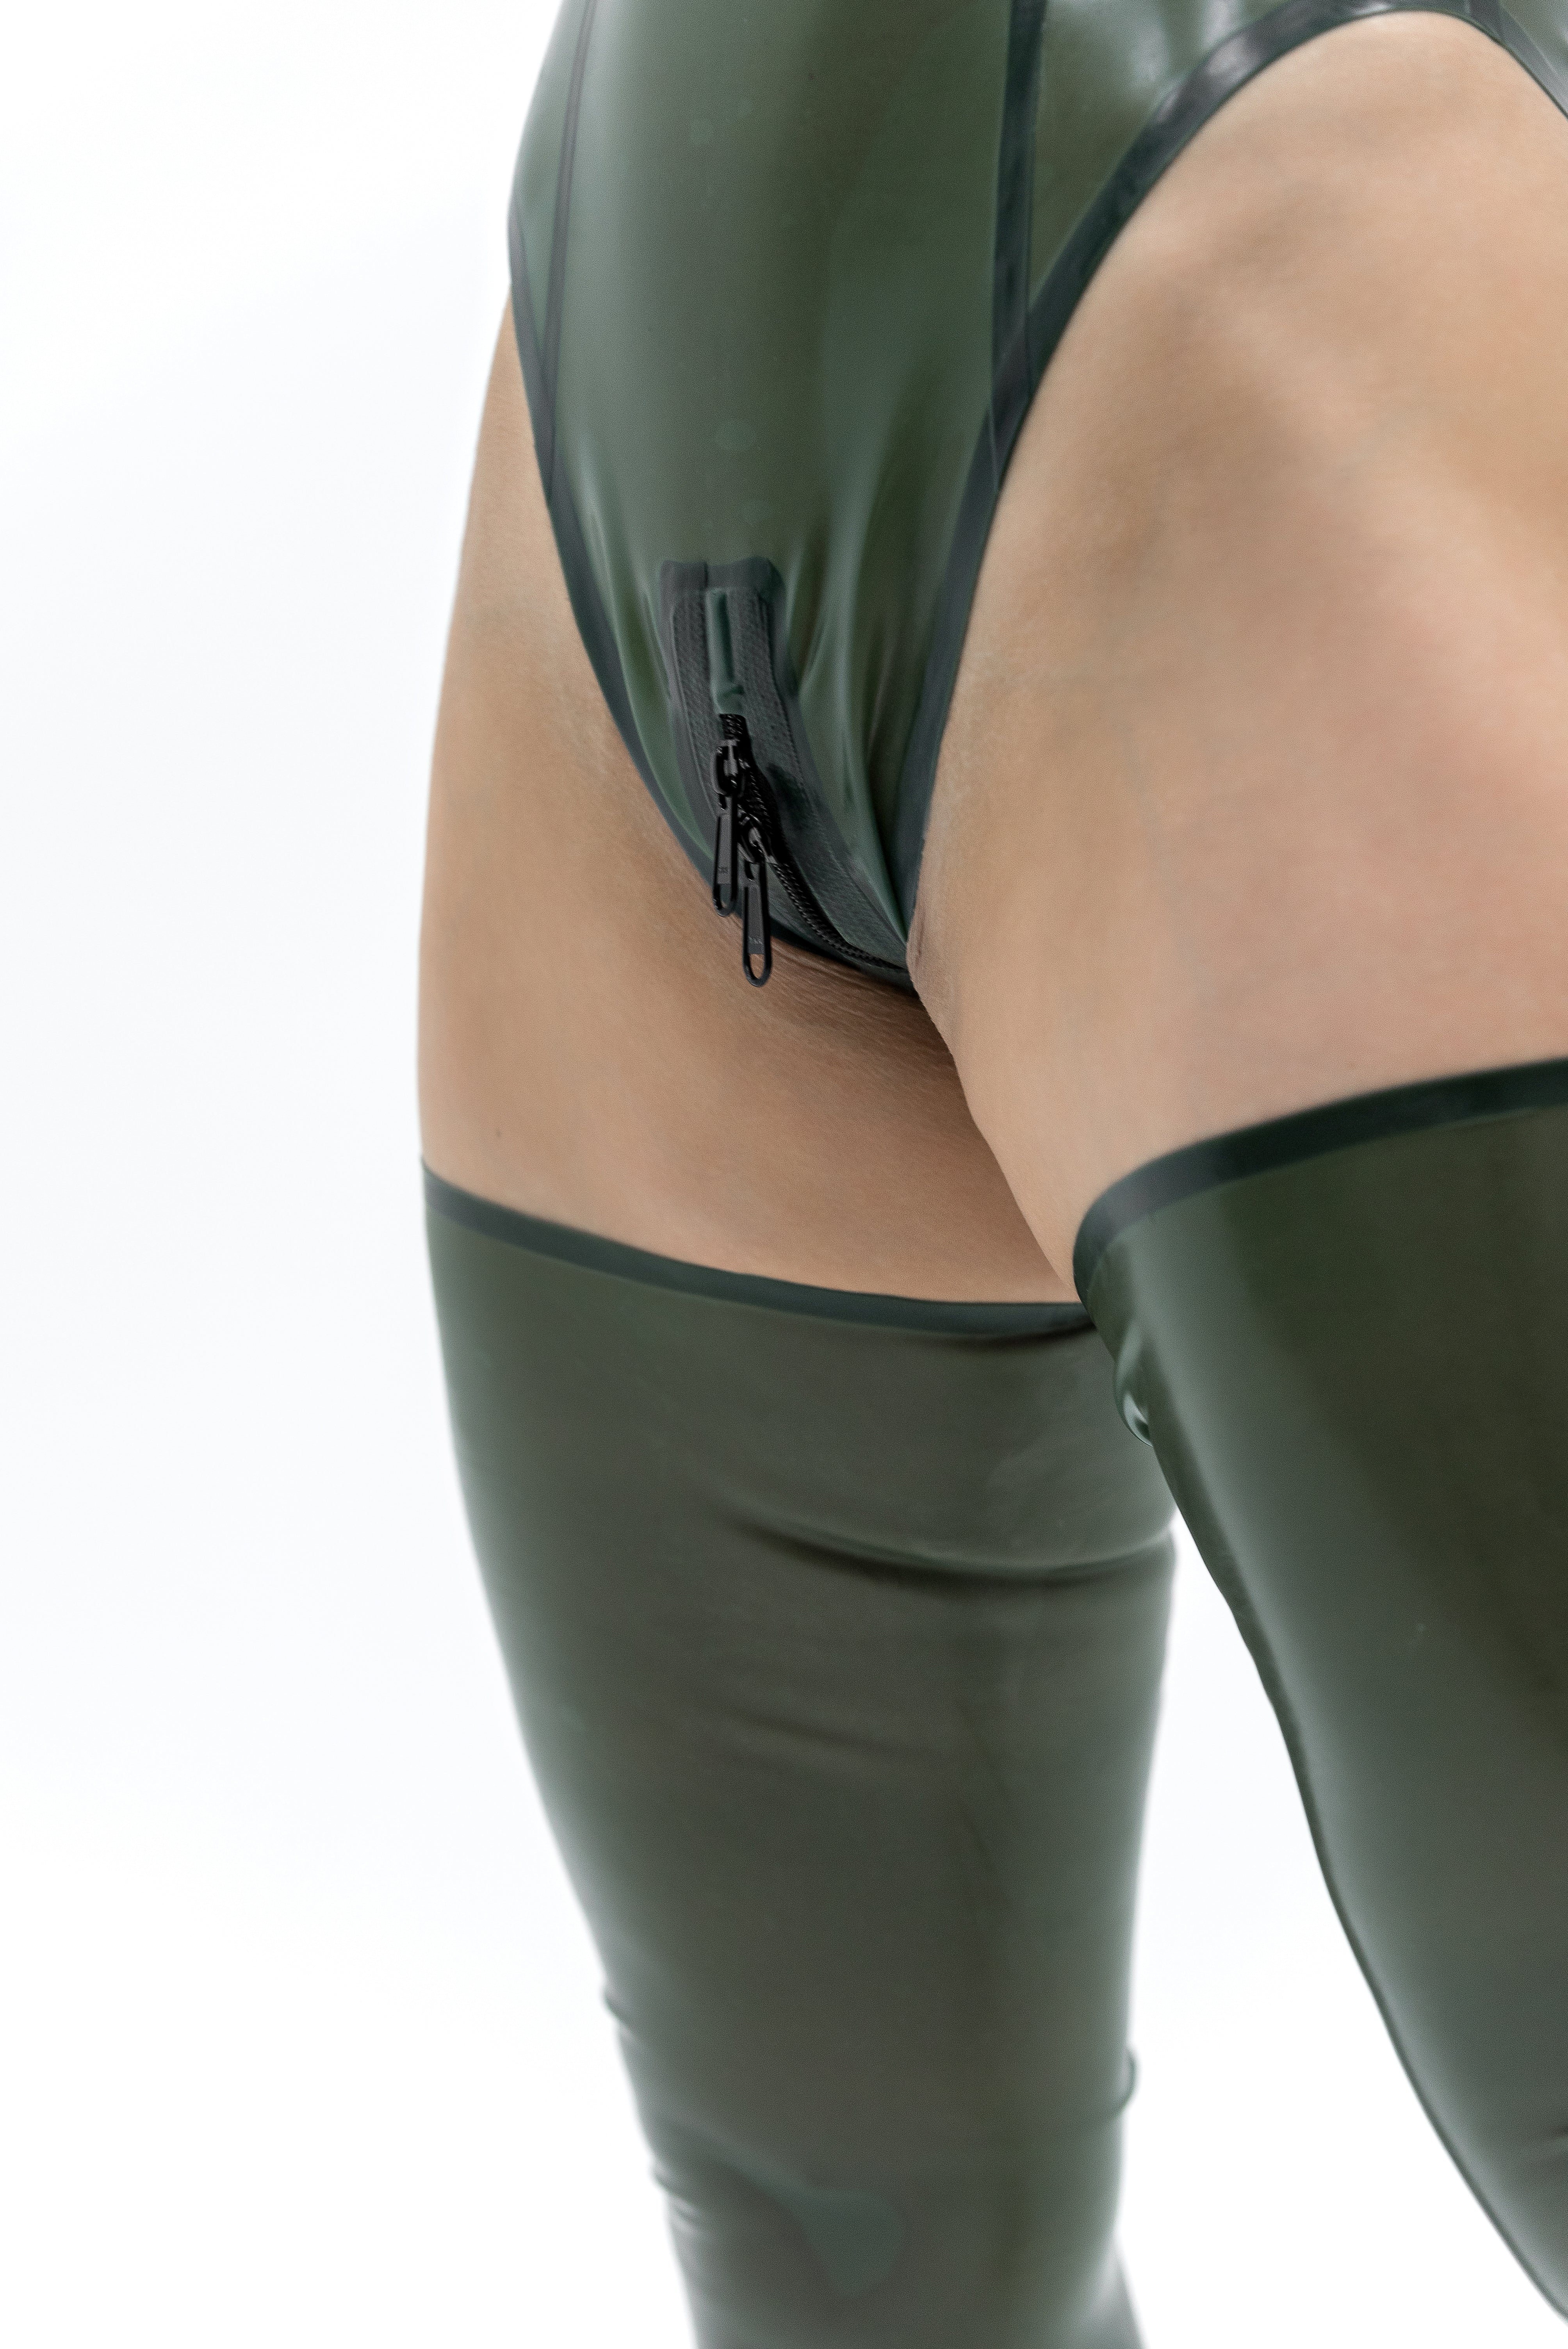 Semi-transparent Olive Full-length Latex Stockings